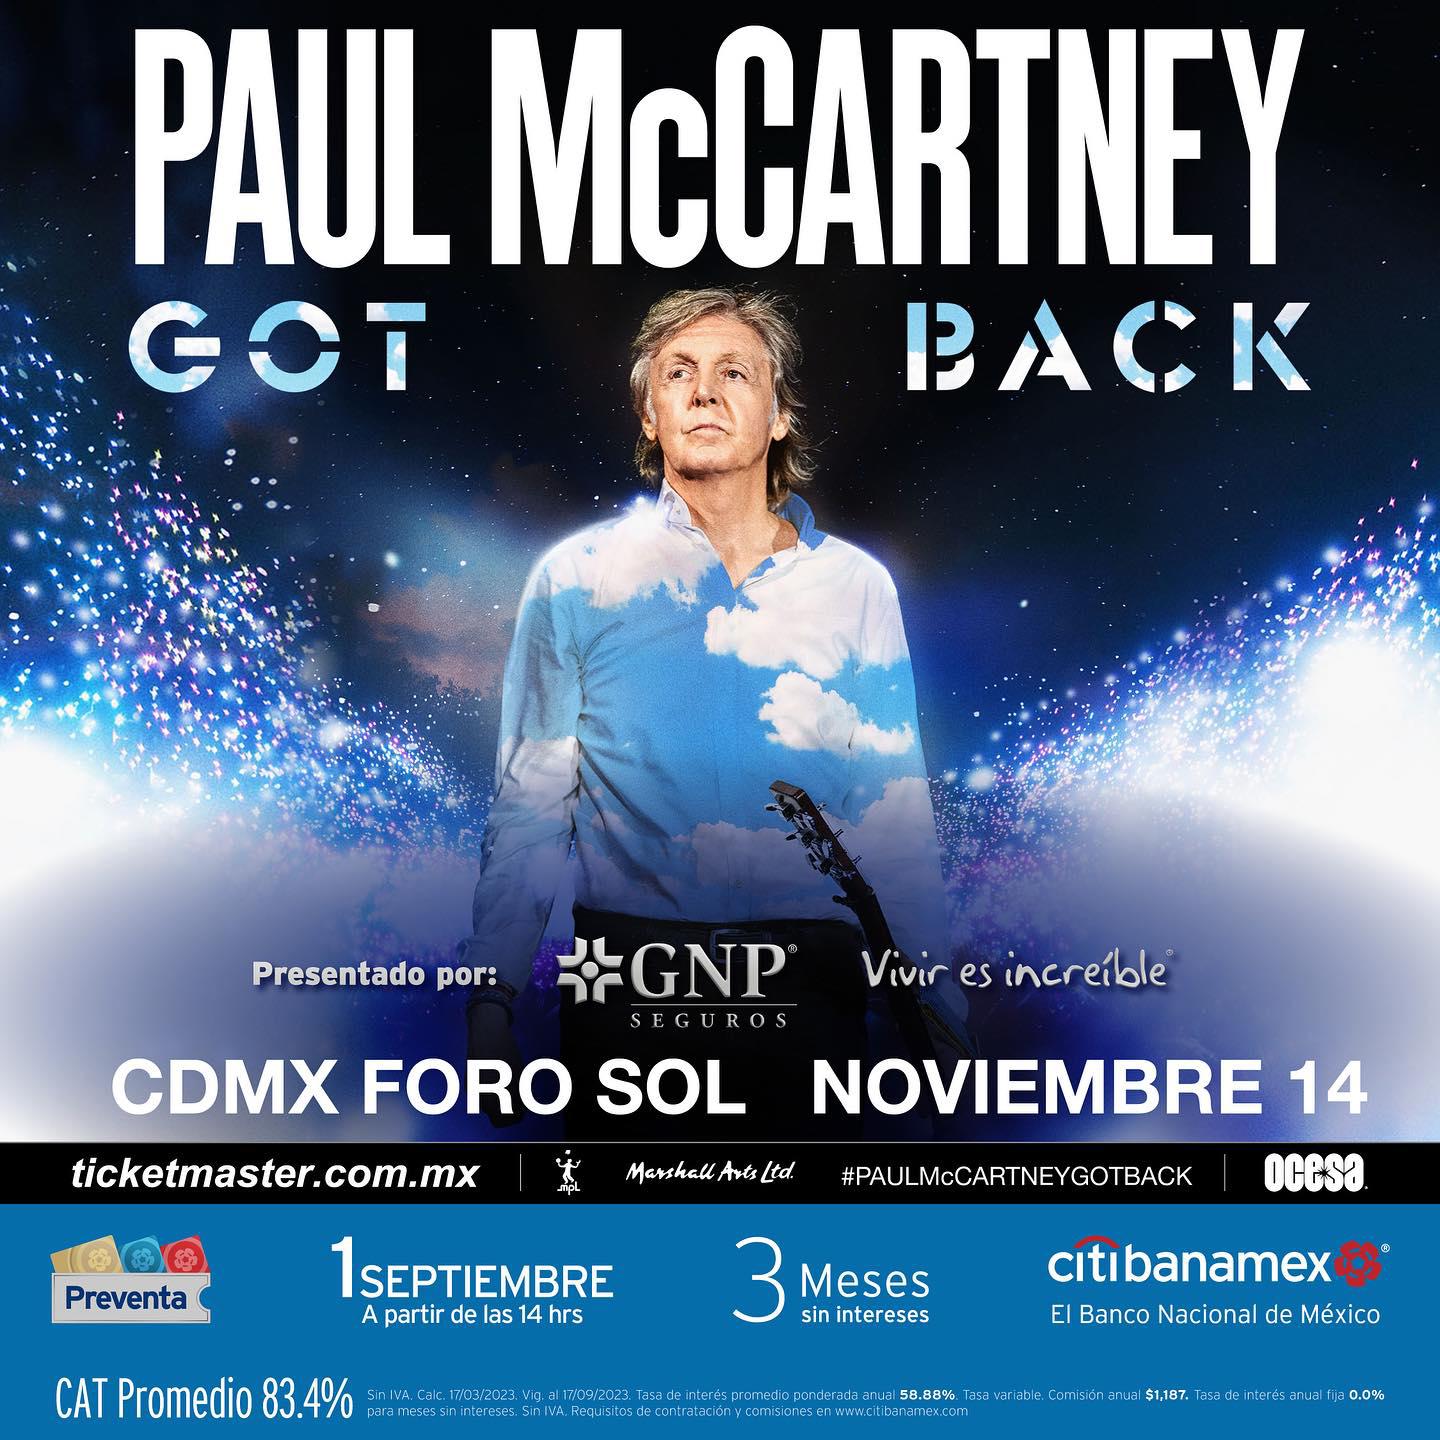 $!Confirman concierto de Paul McCartney en México